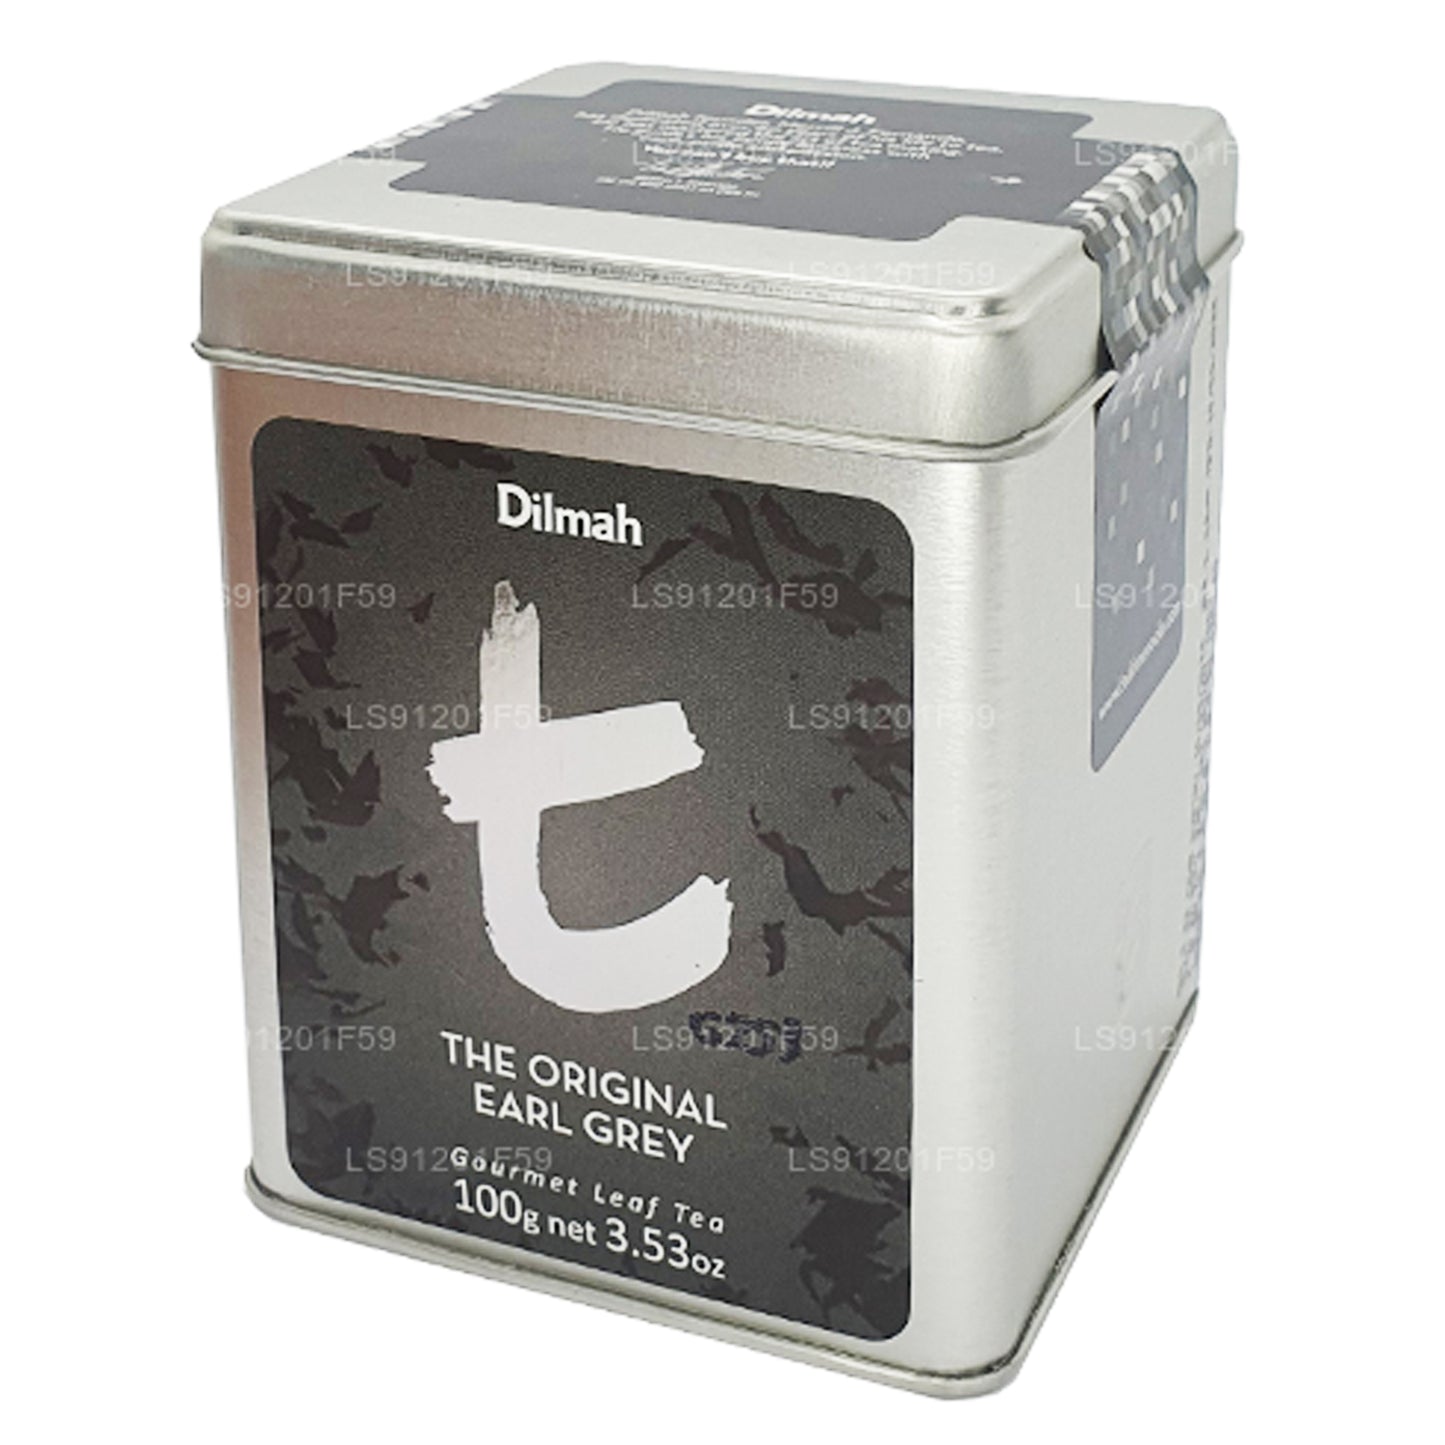 Dilmah T-serien Original Earl Grey lösa blad te (100g)